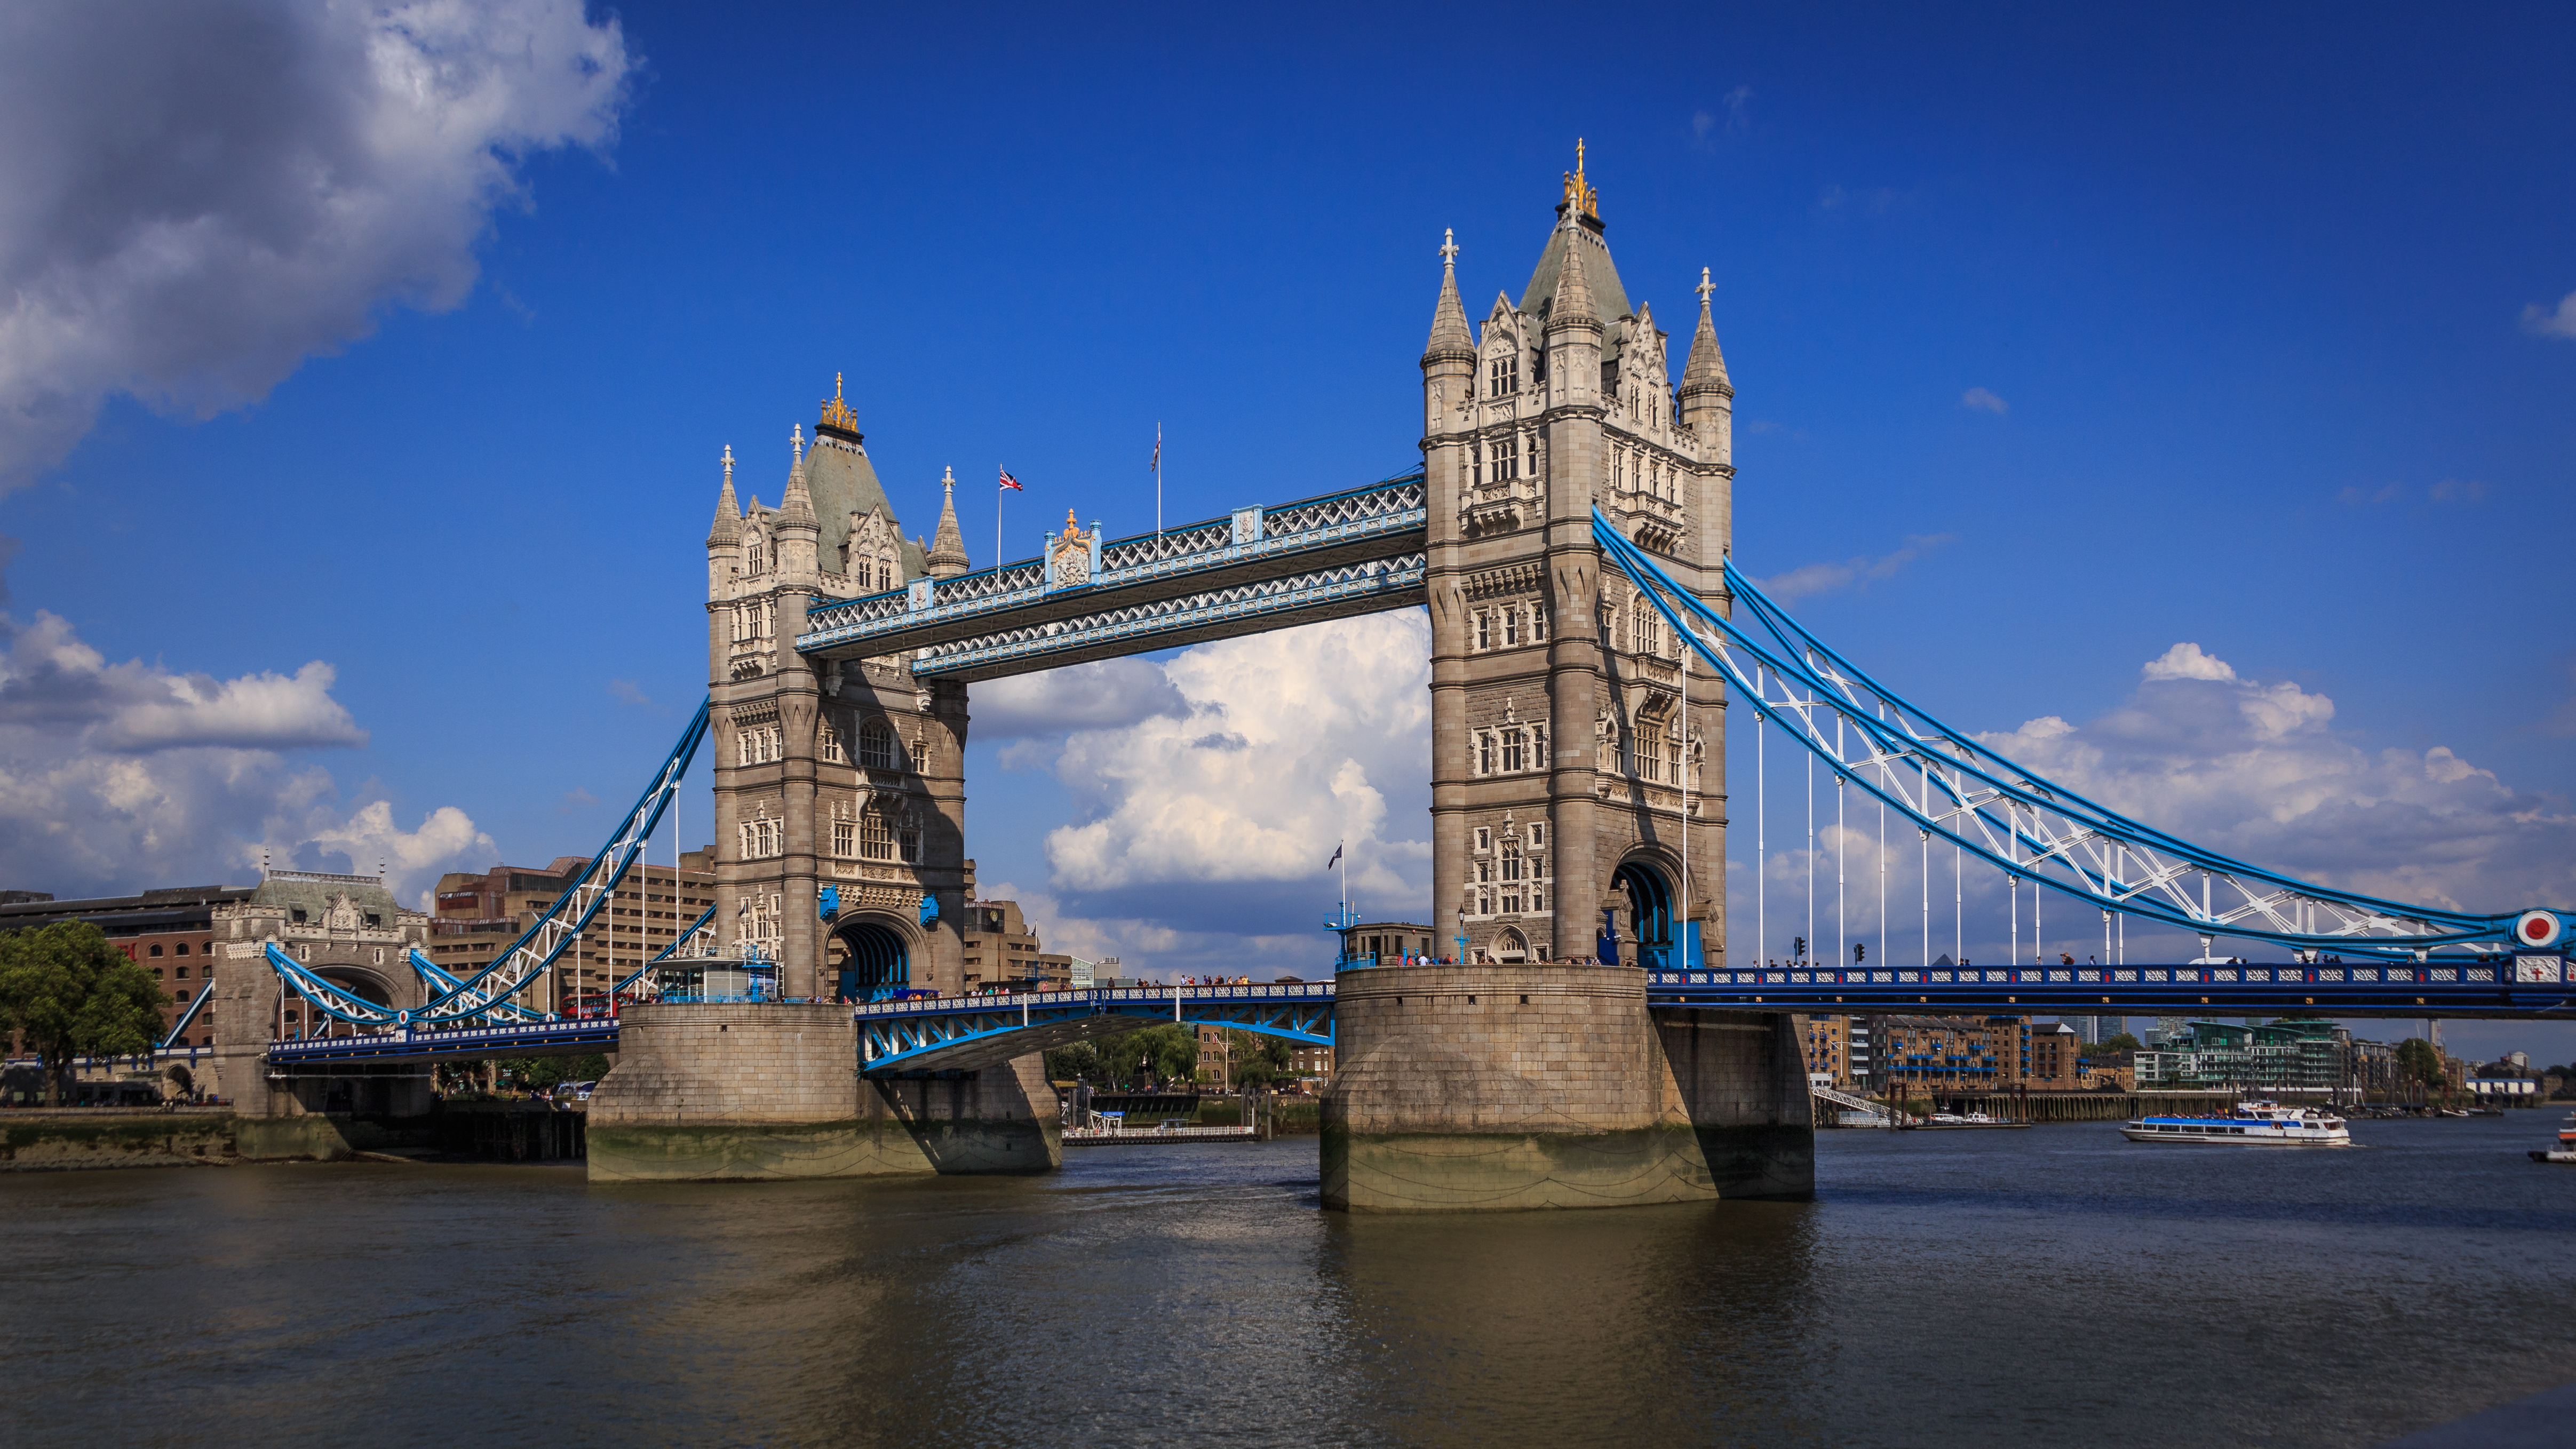 File:London - London Tower Bridge - 140806 171049.jpg - Wikimedia ...